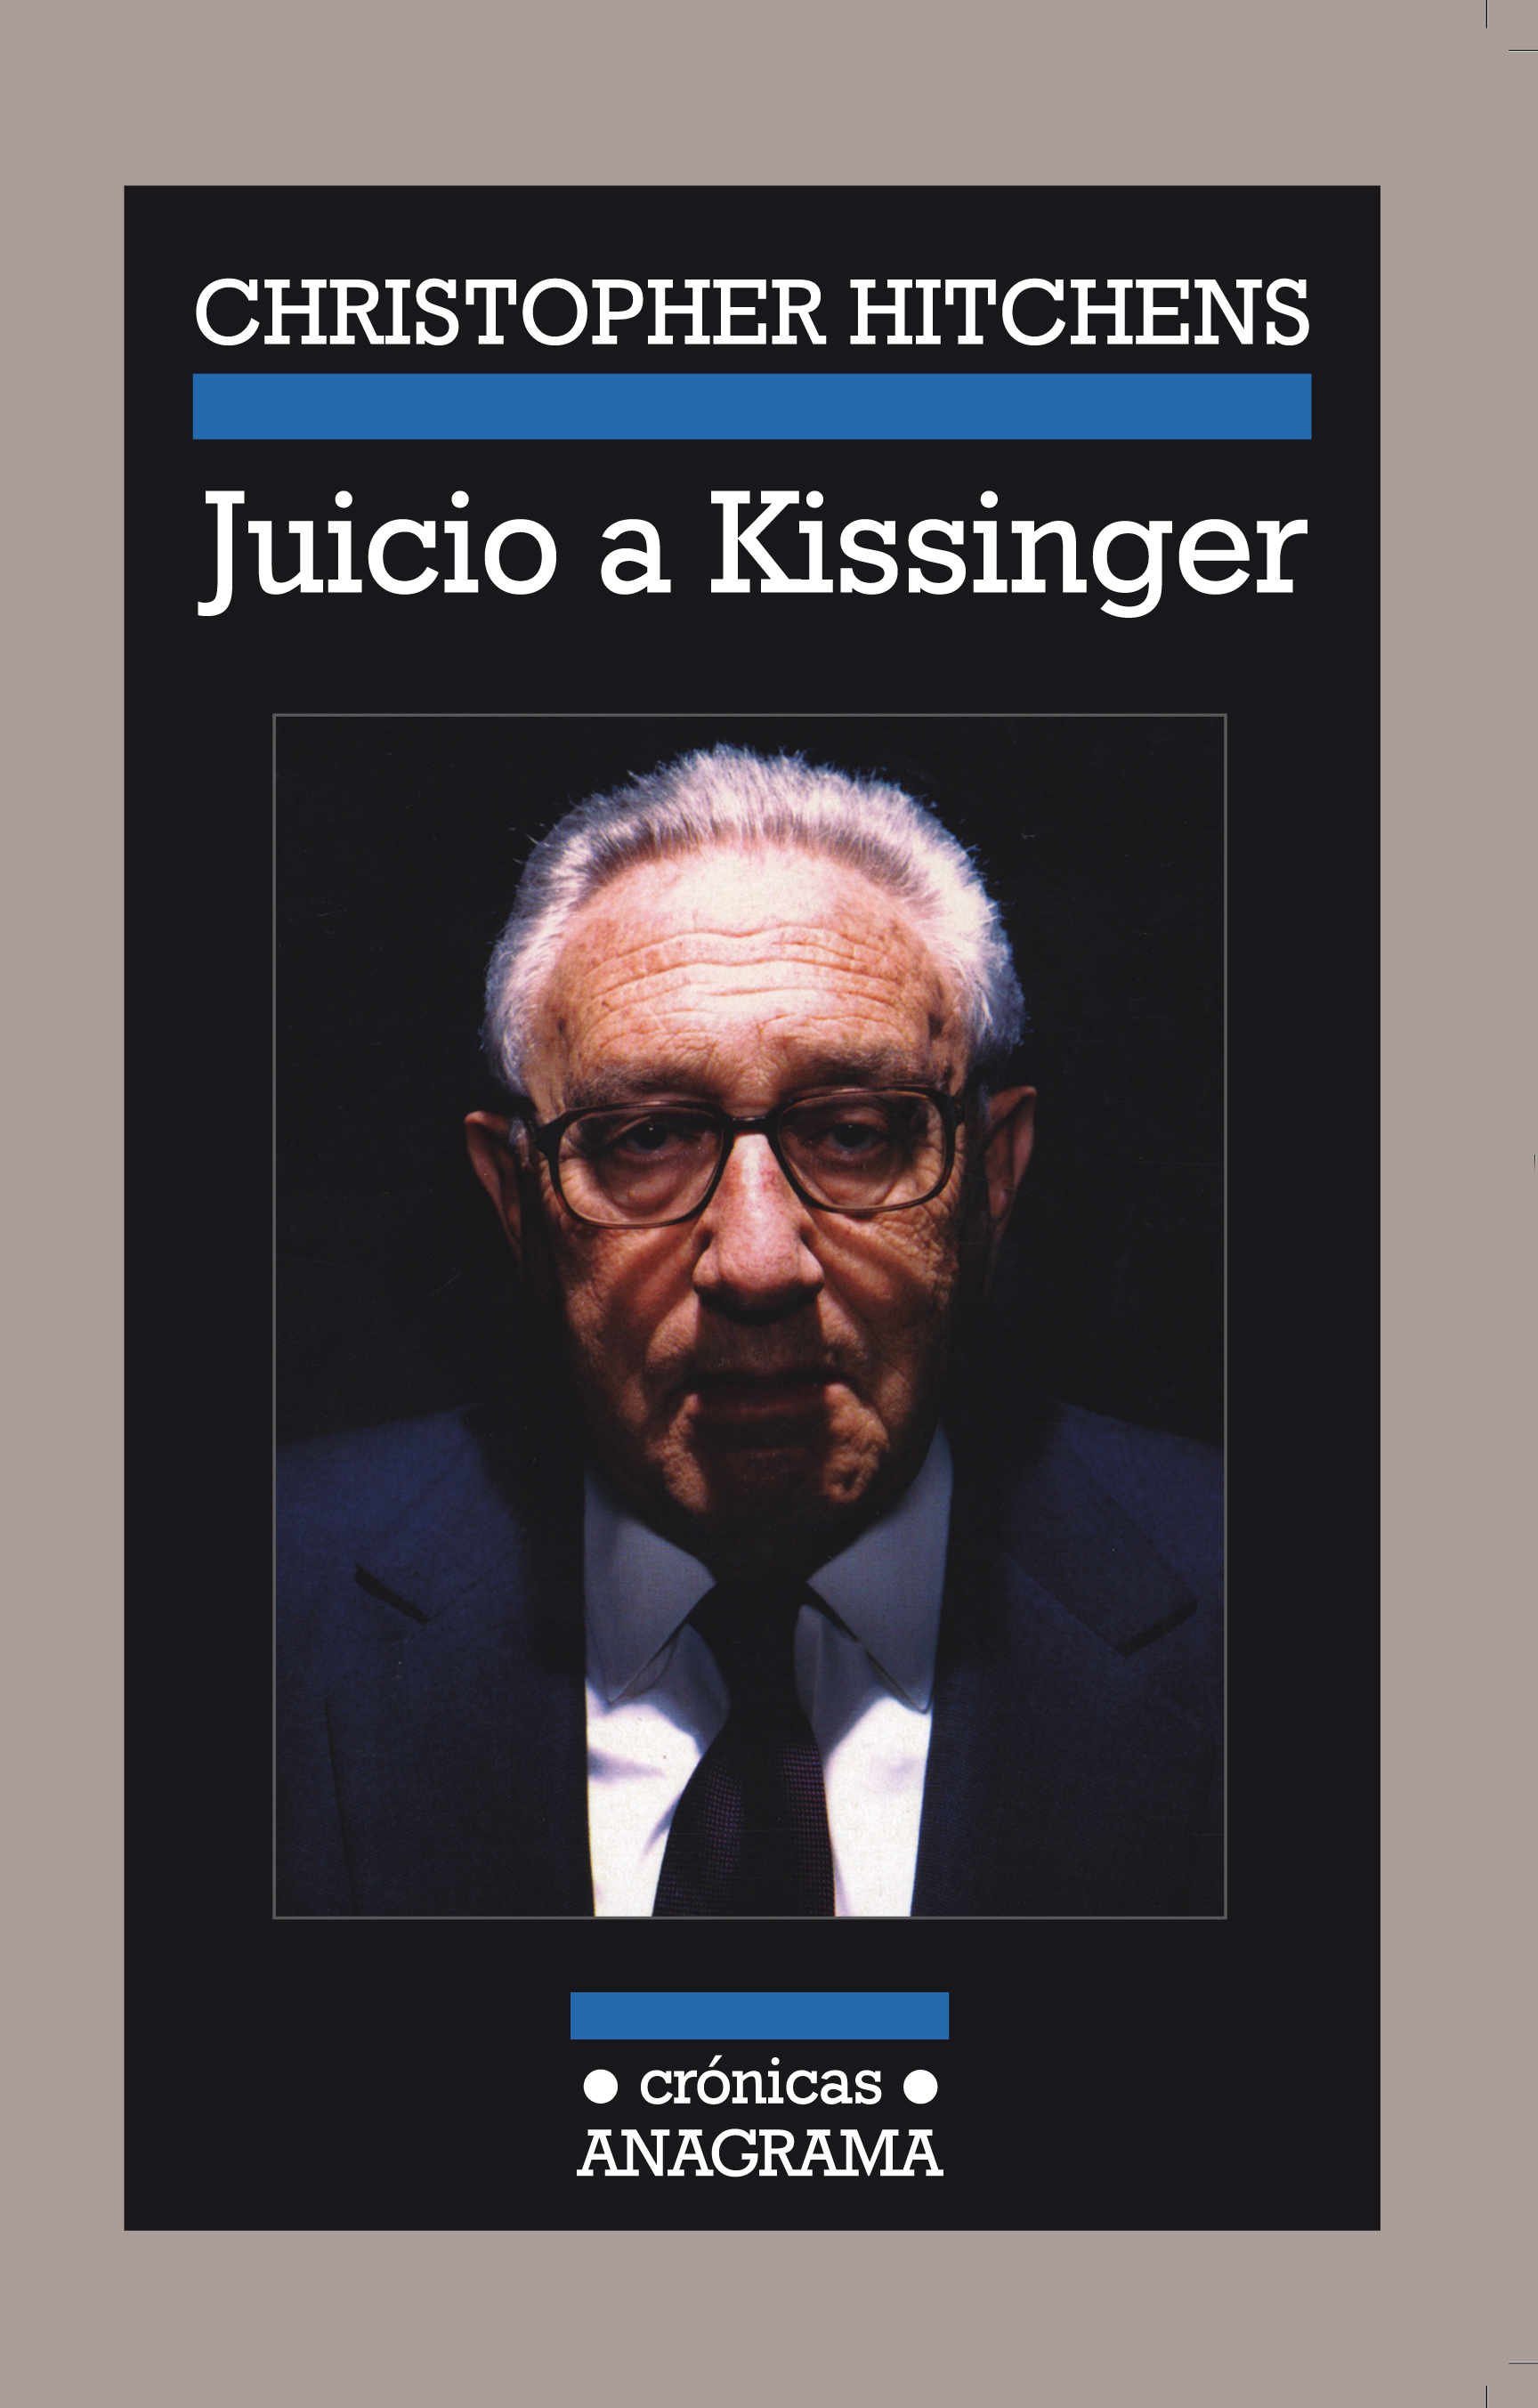 Juicio a Kissinger